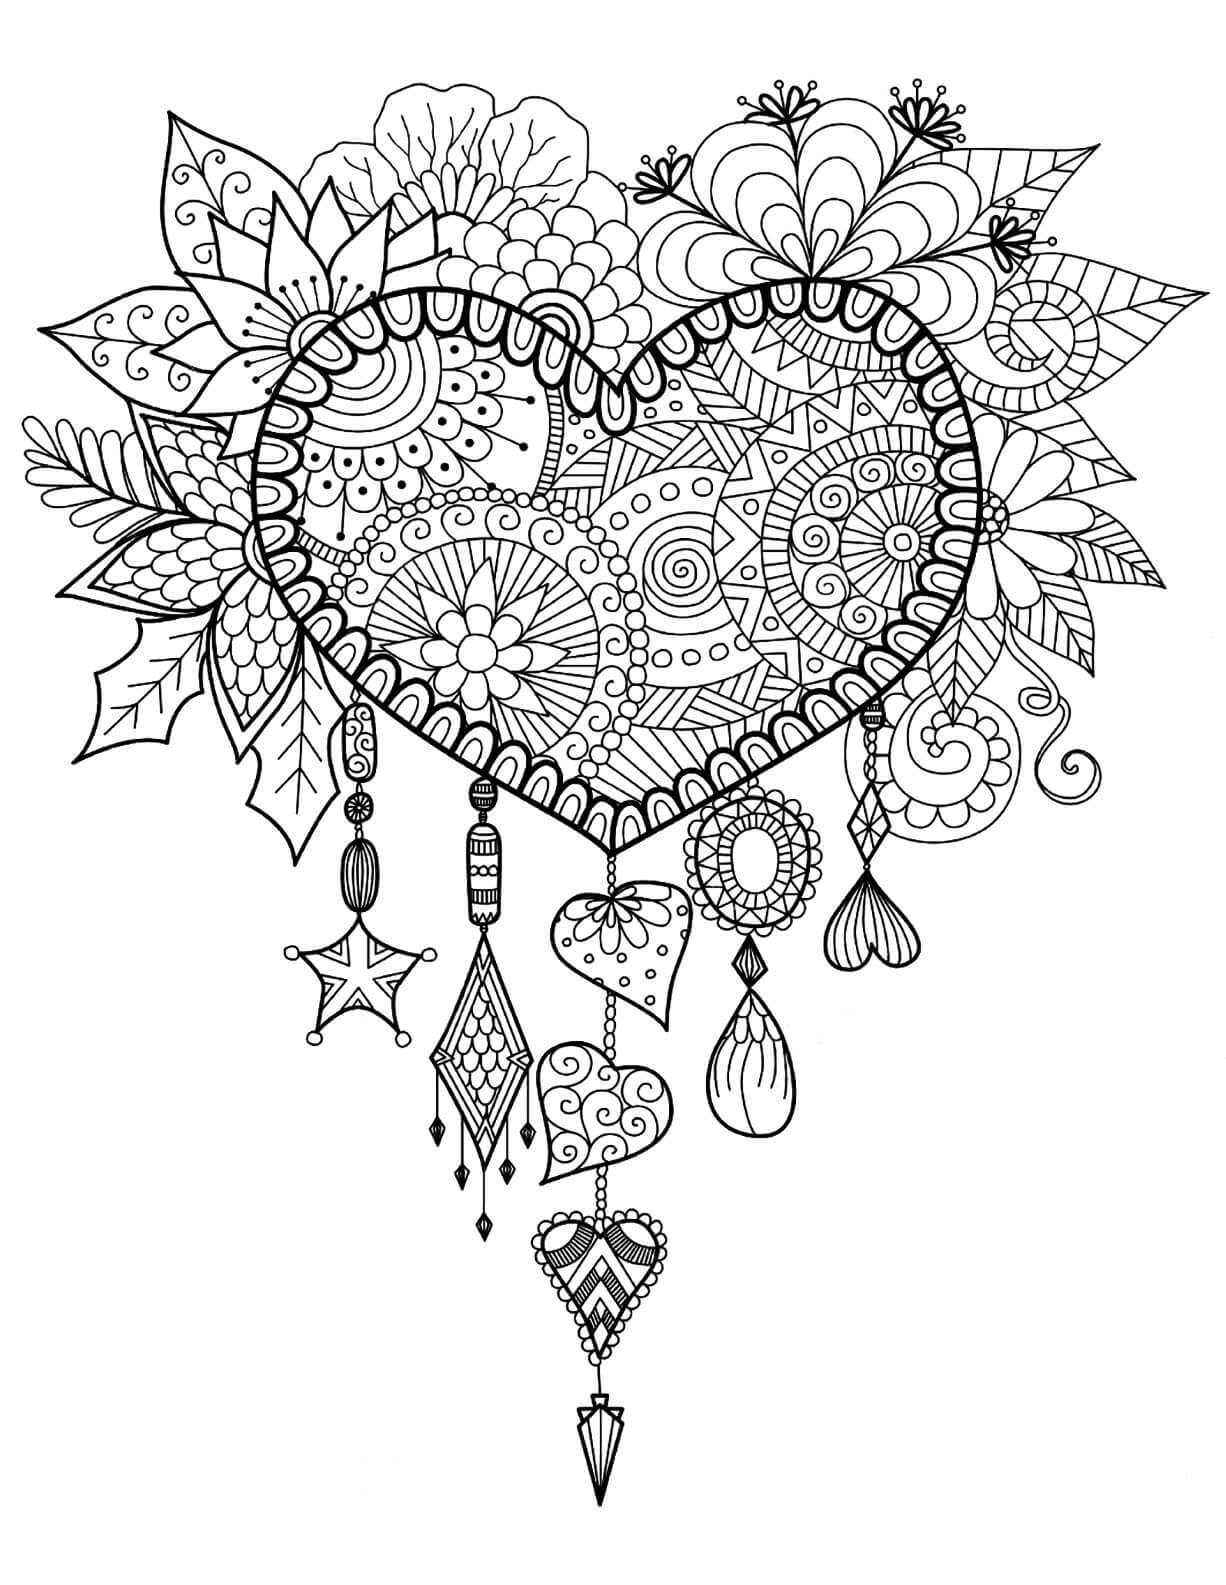 Art de Mandala de Coeur coloring page